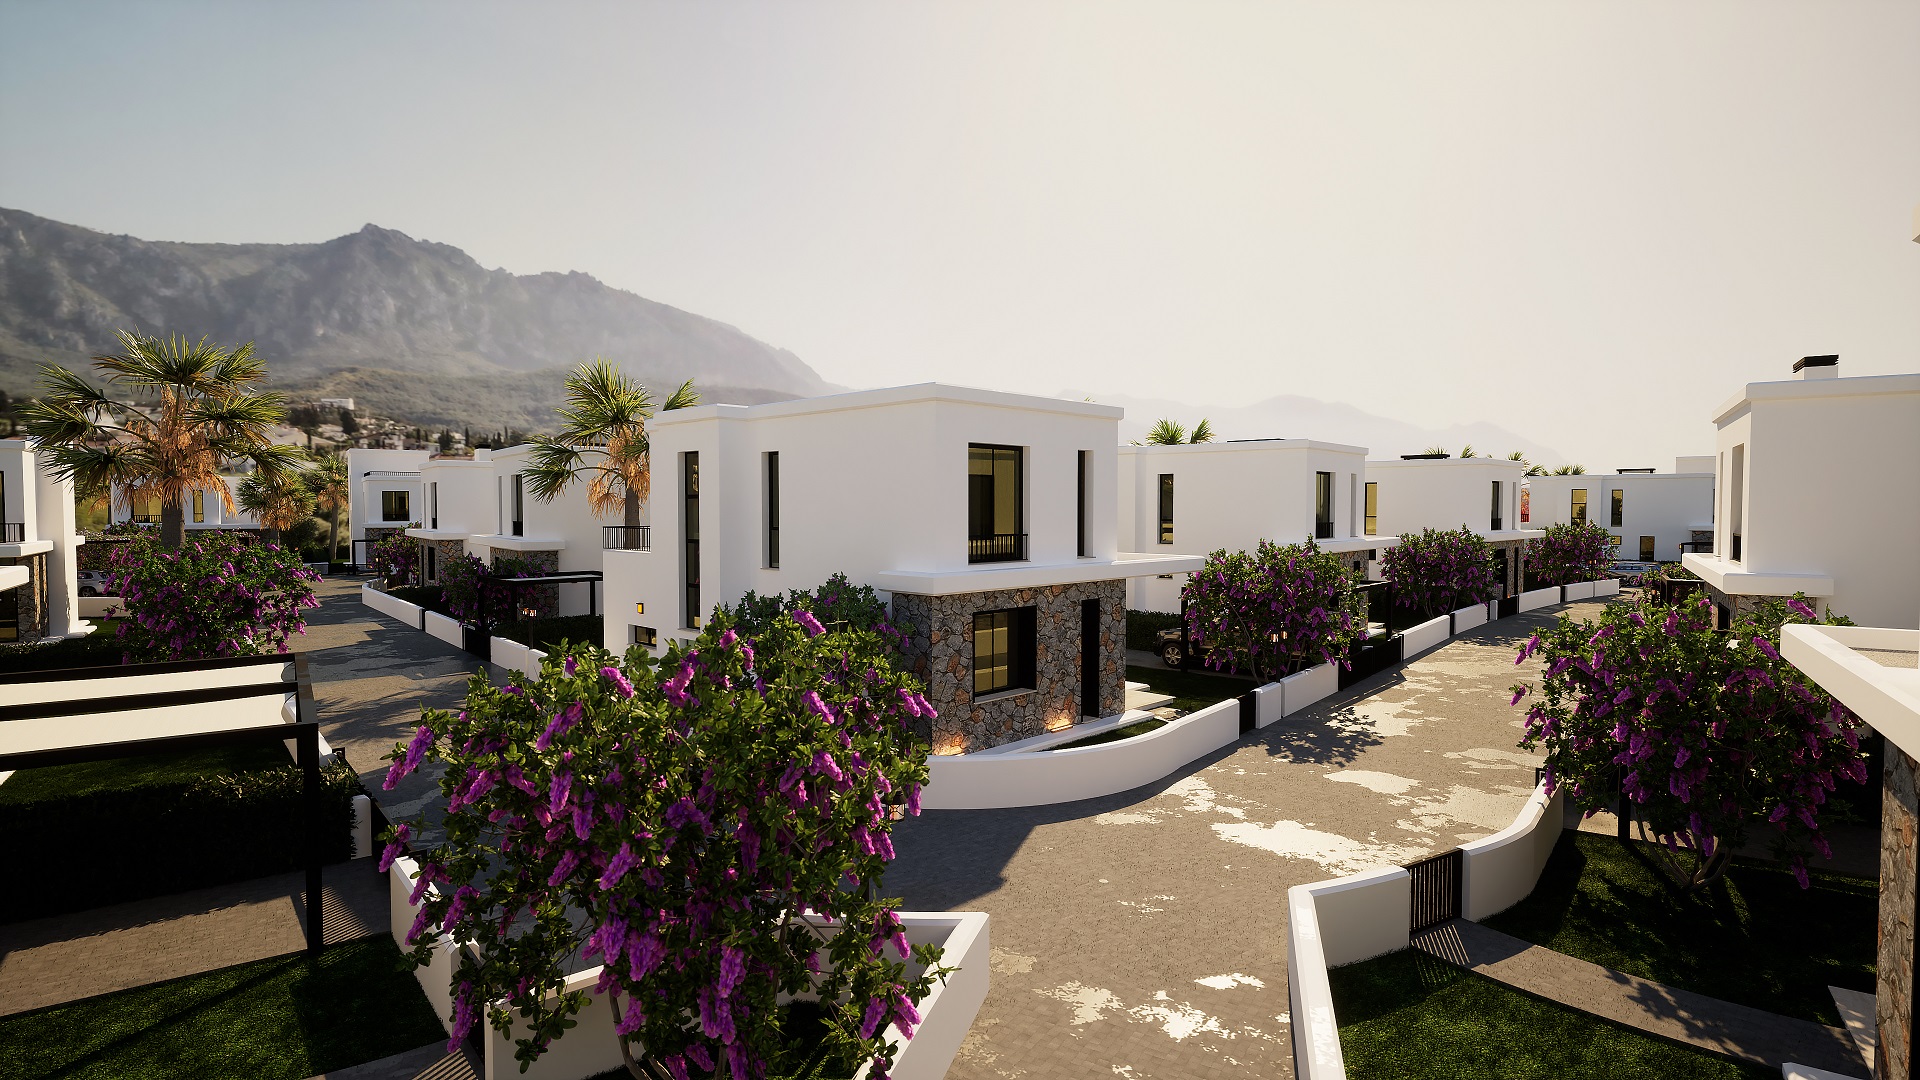 Beautiful villas in the prestigious region of Edremid